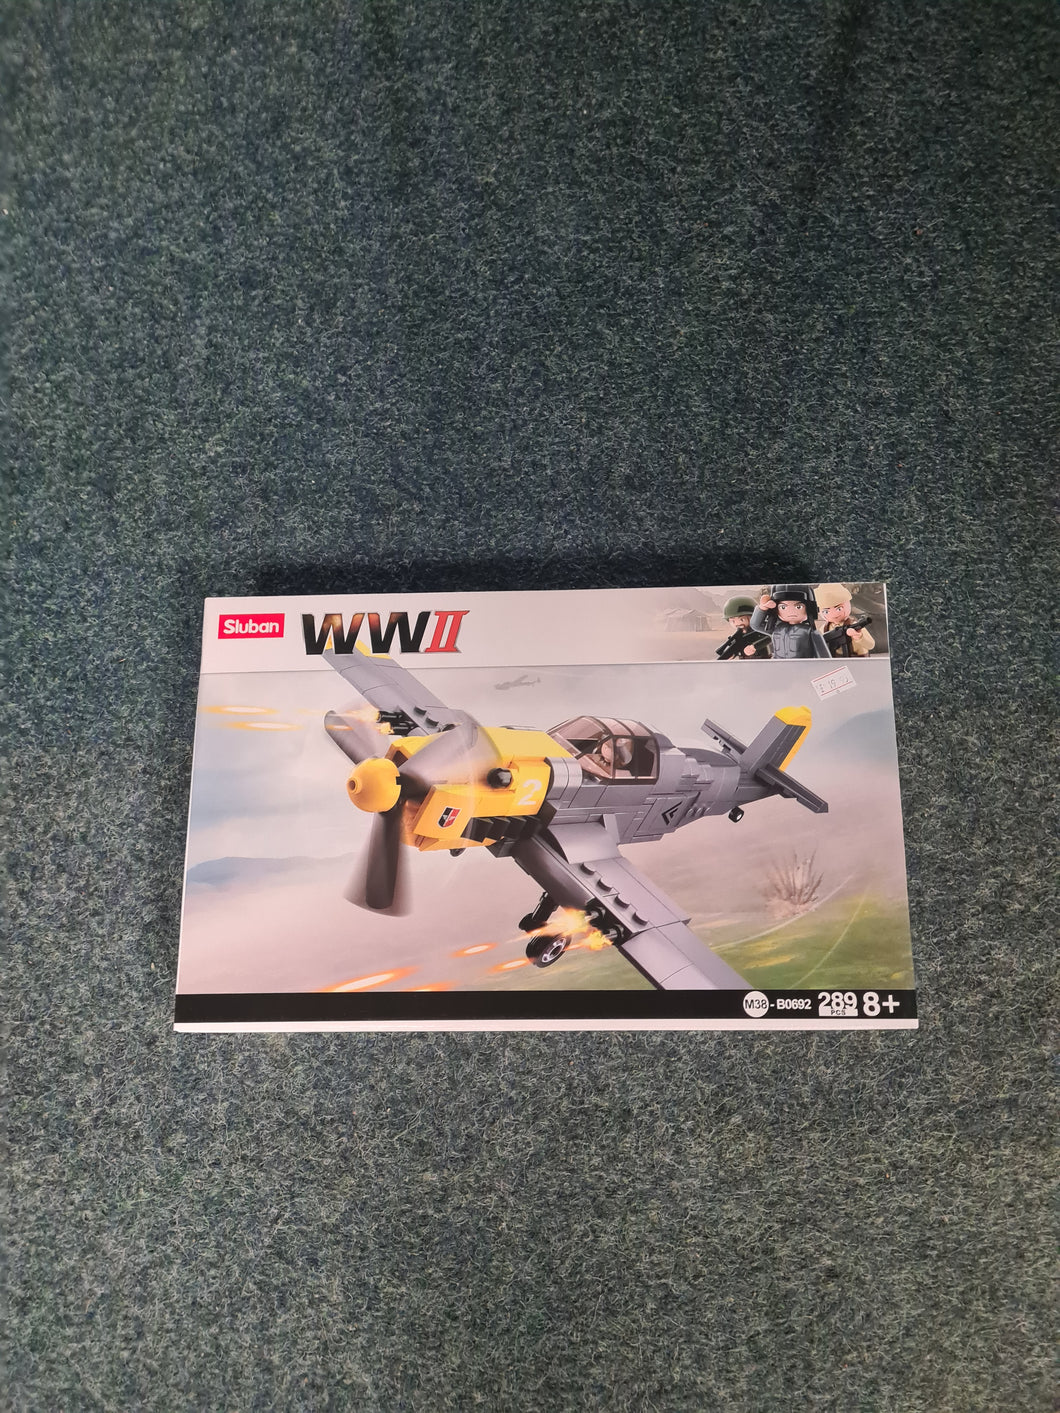 Sluban WW11 German Messerscnmitt building block kit